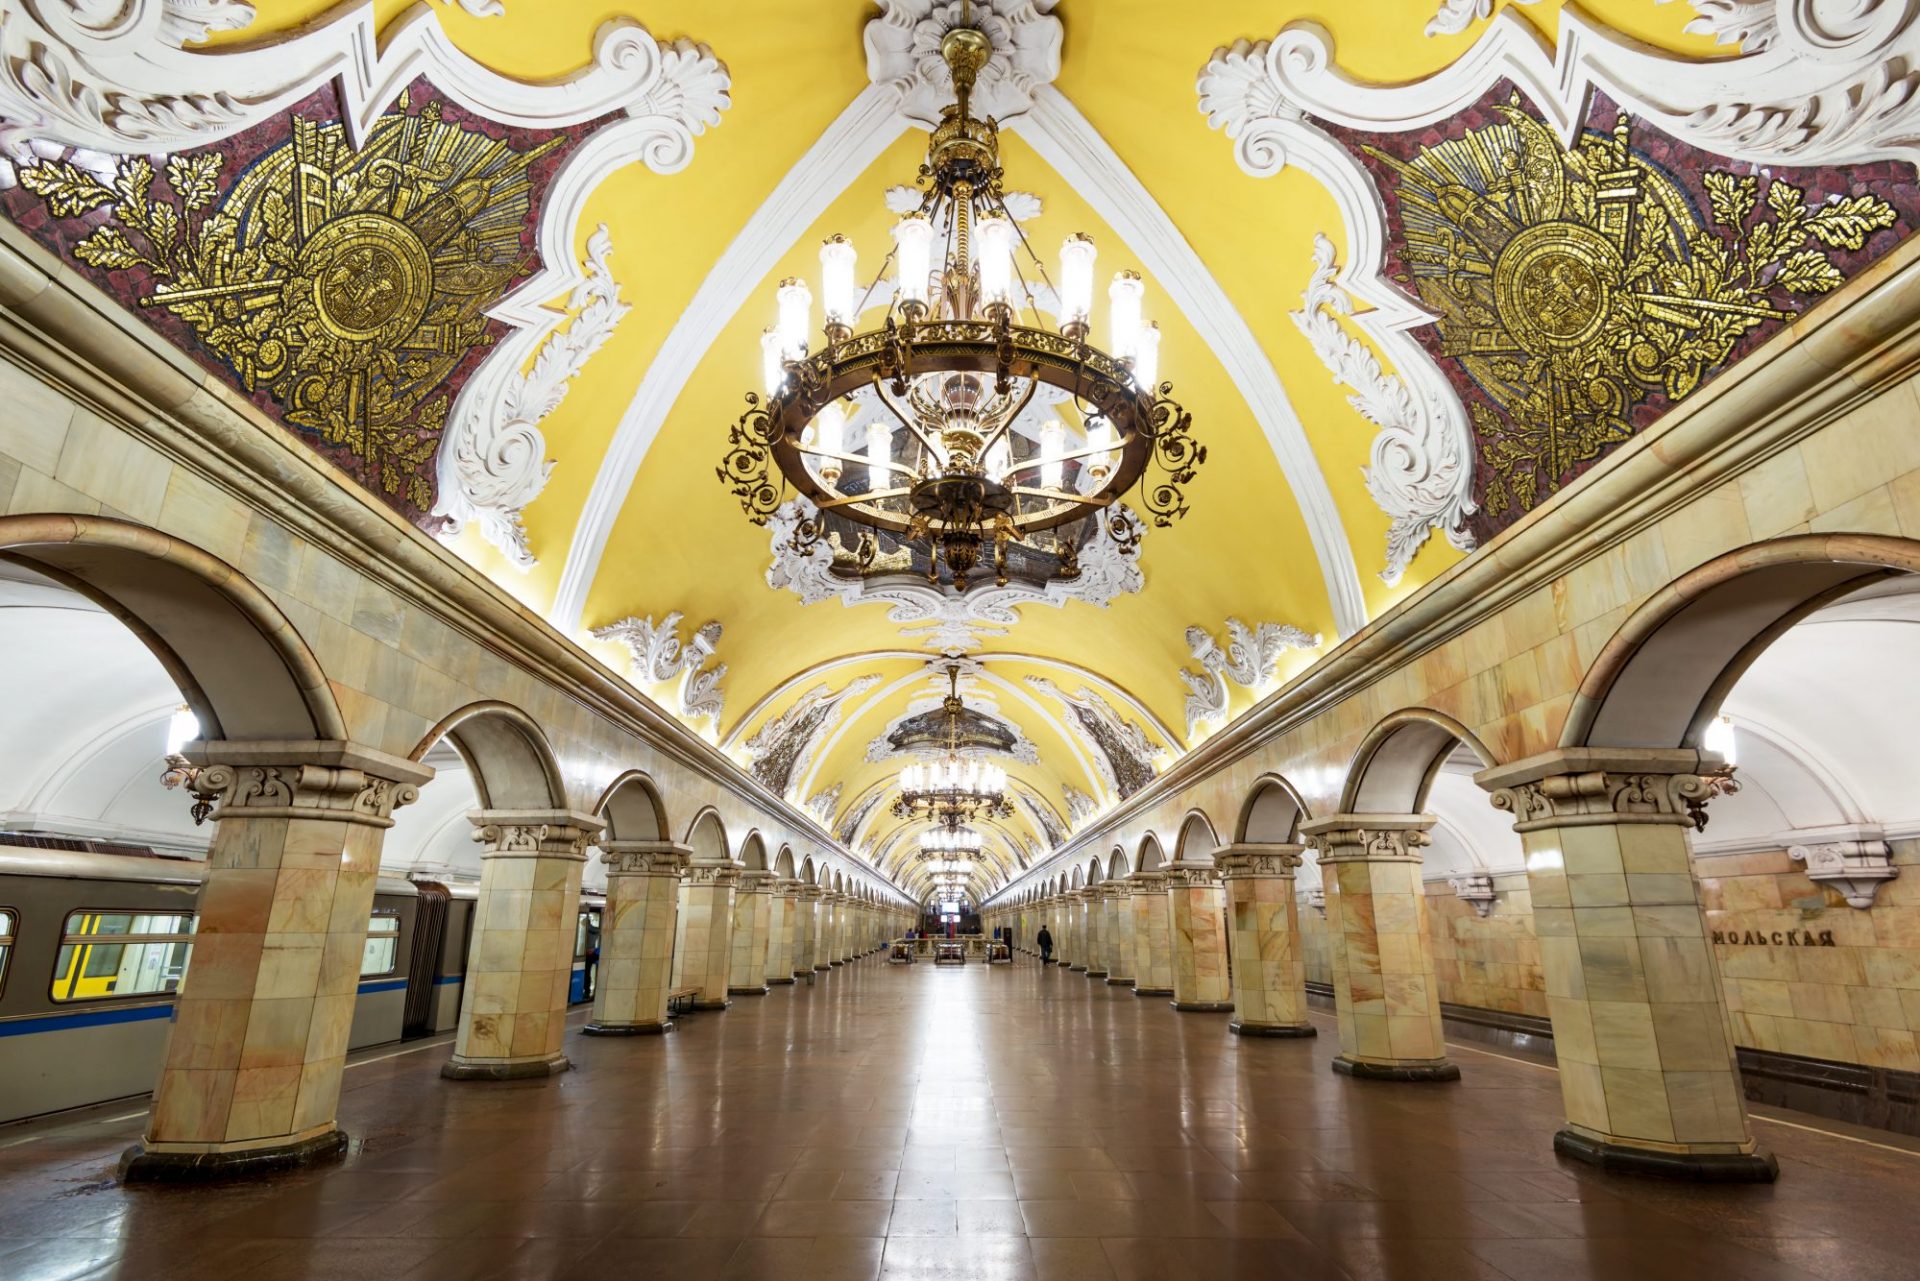 metro-station-Komsomolskaya-in-Moscow-Scallger-1920x1281.jpg